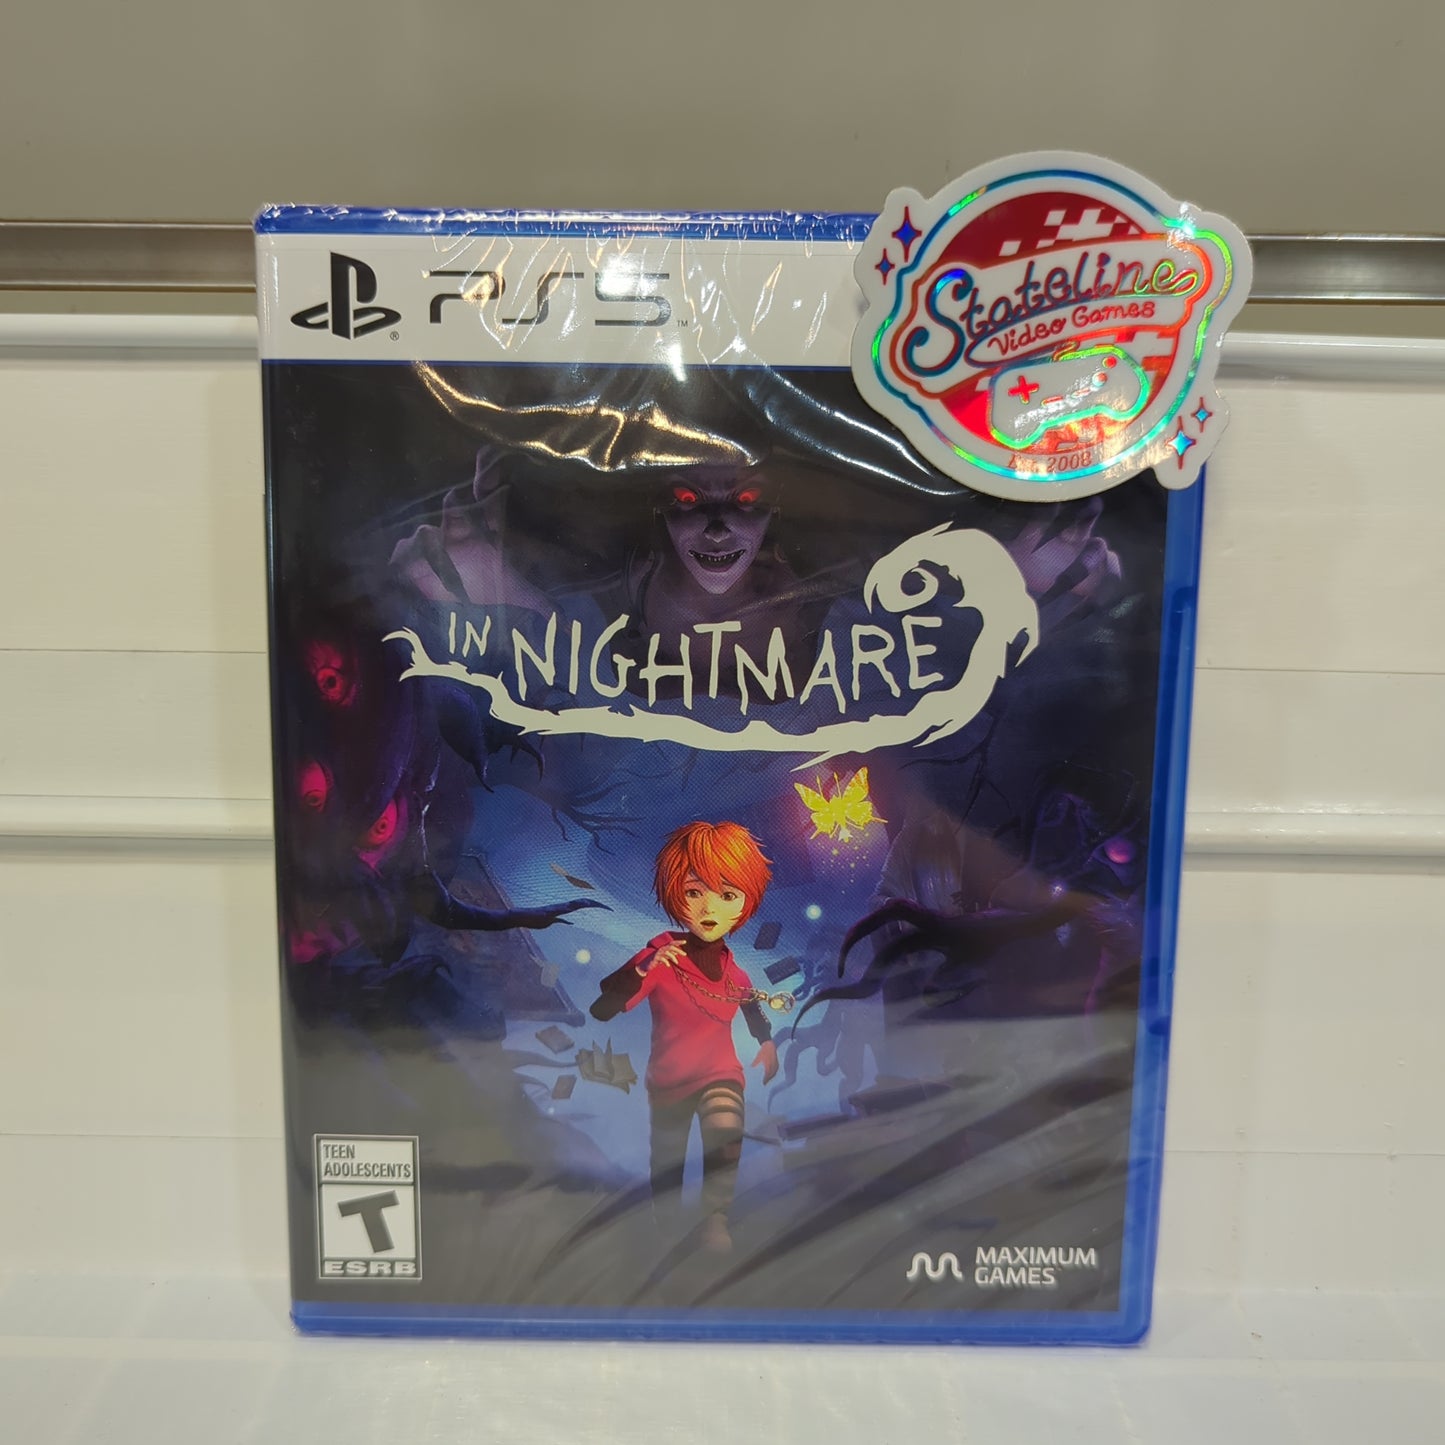 In Nightmare - Playstation 5